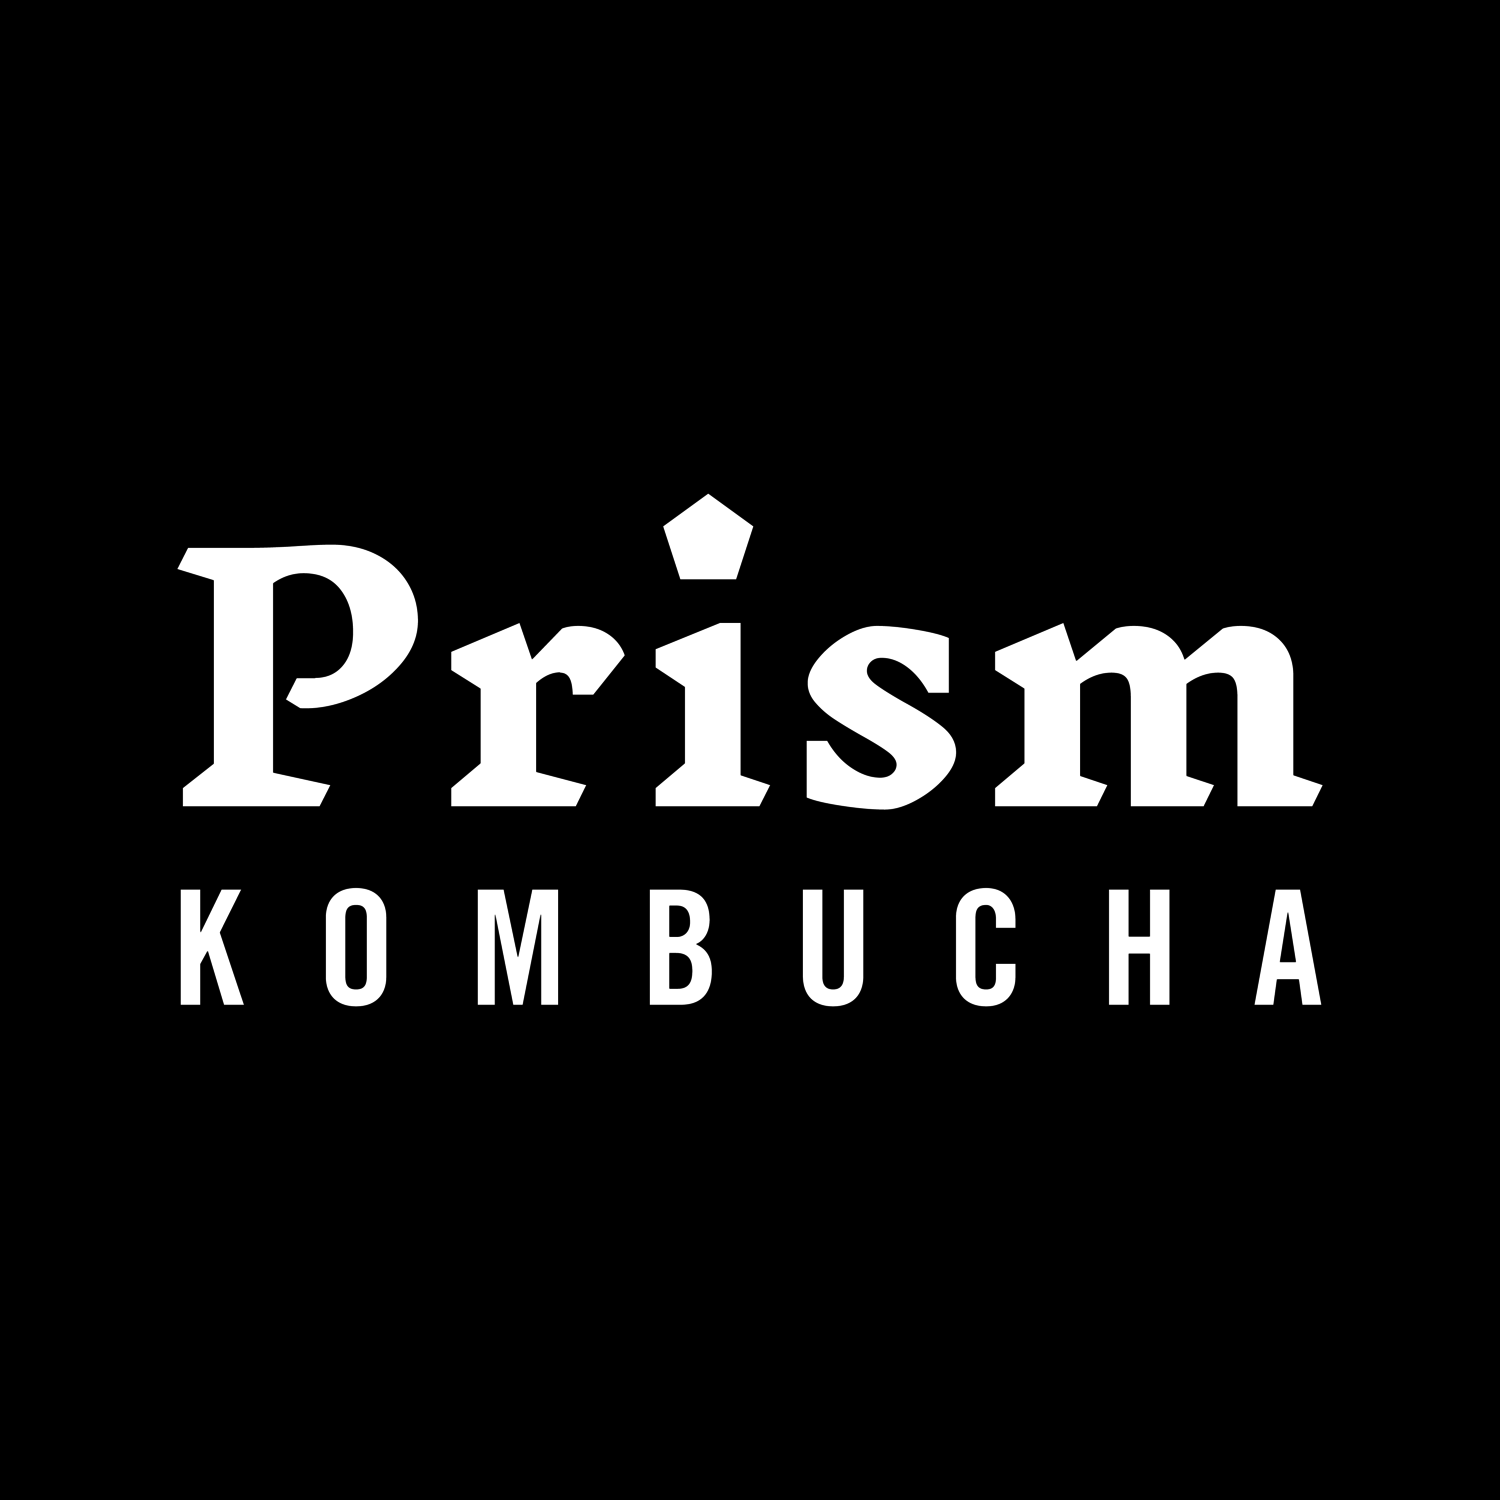 Prism Kombucha logo